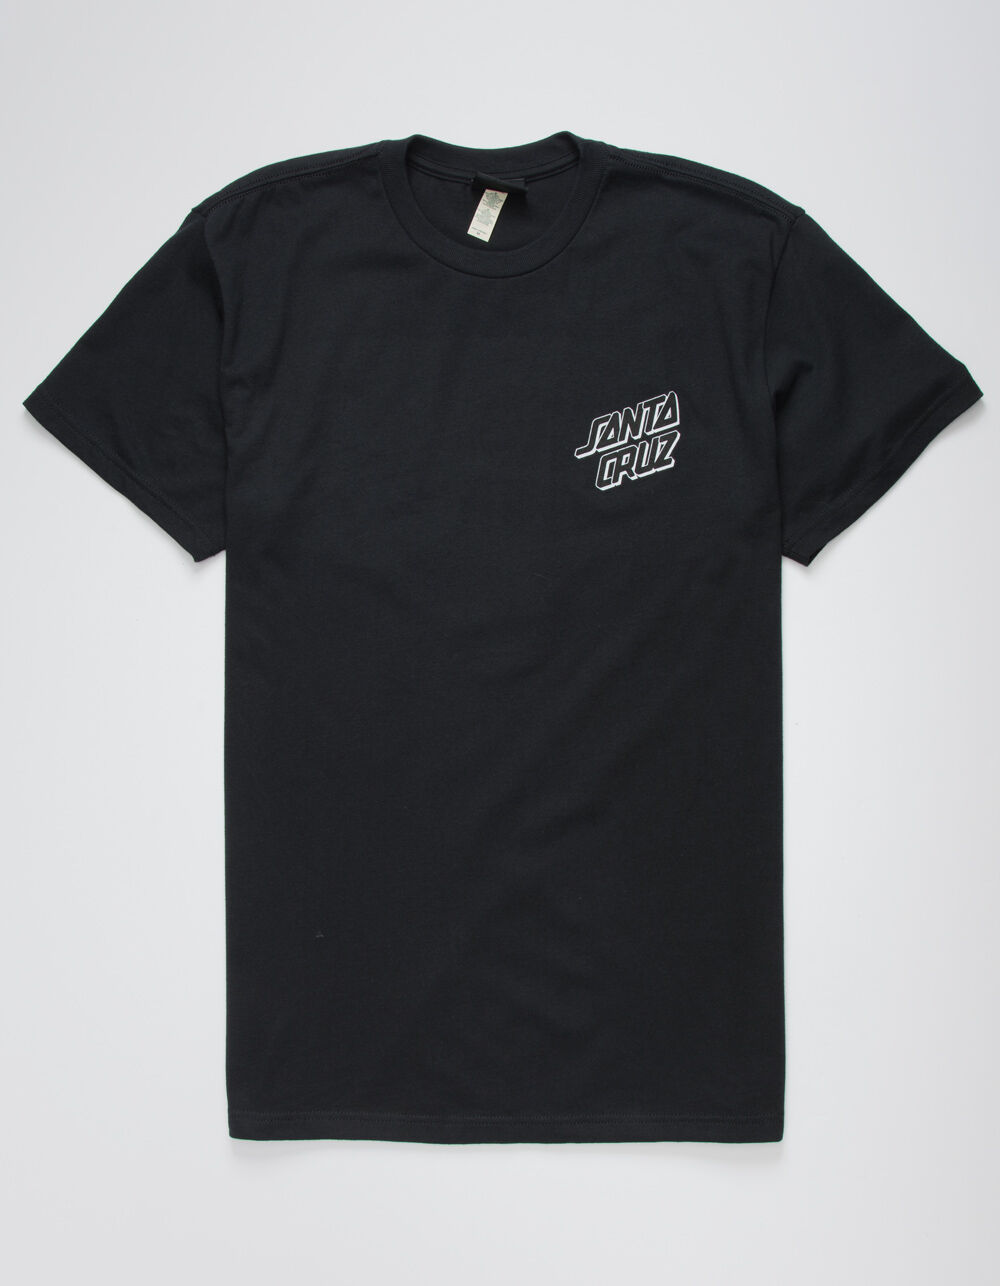 SANTA CRUZ Twister Dot Eco Mens Black T-Shirt - BLACK | Tillys